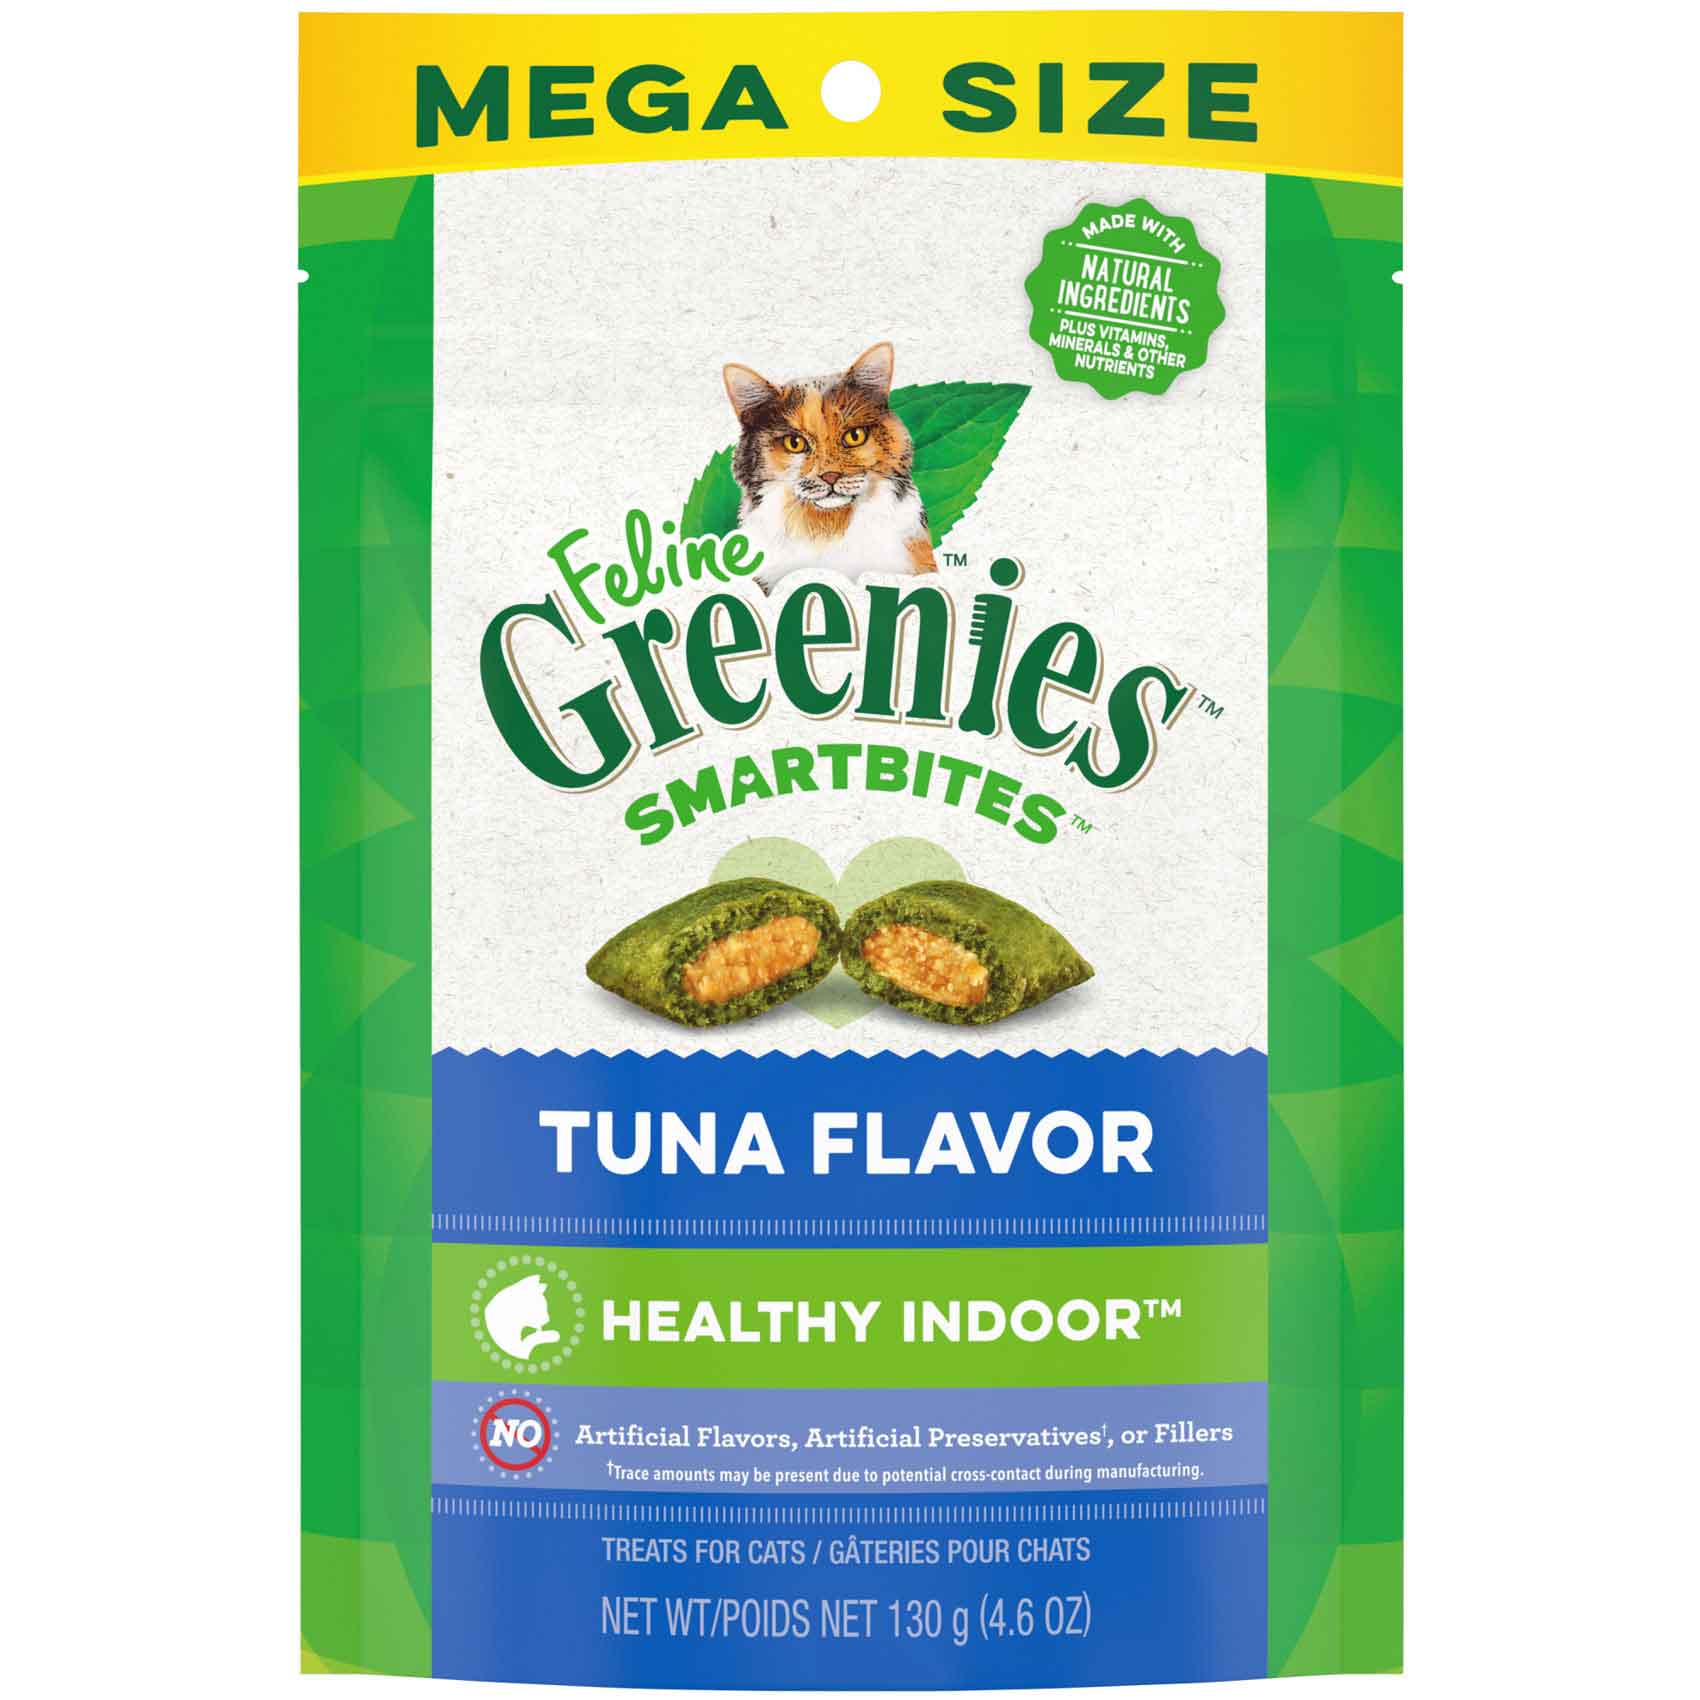 Feline Greenies Smartbites Tuna Flavor Treats for Cats, 4.6 Ounces